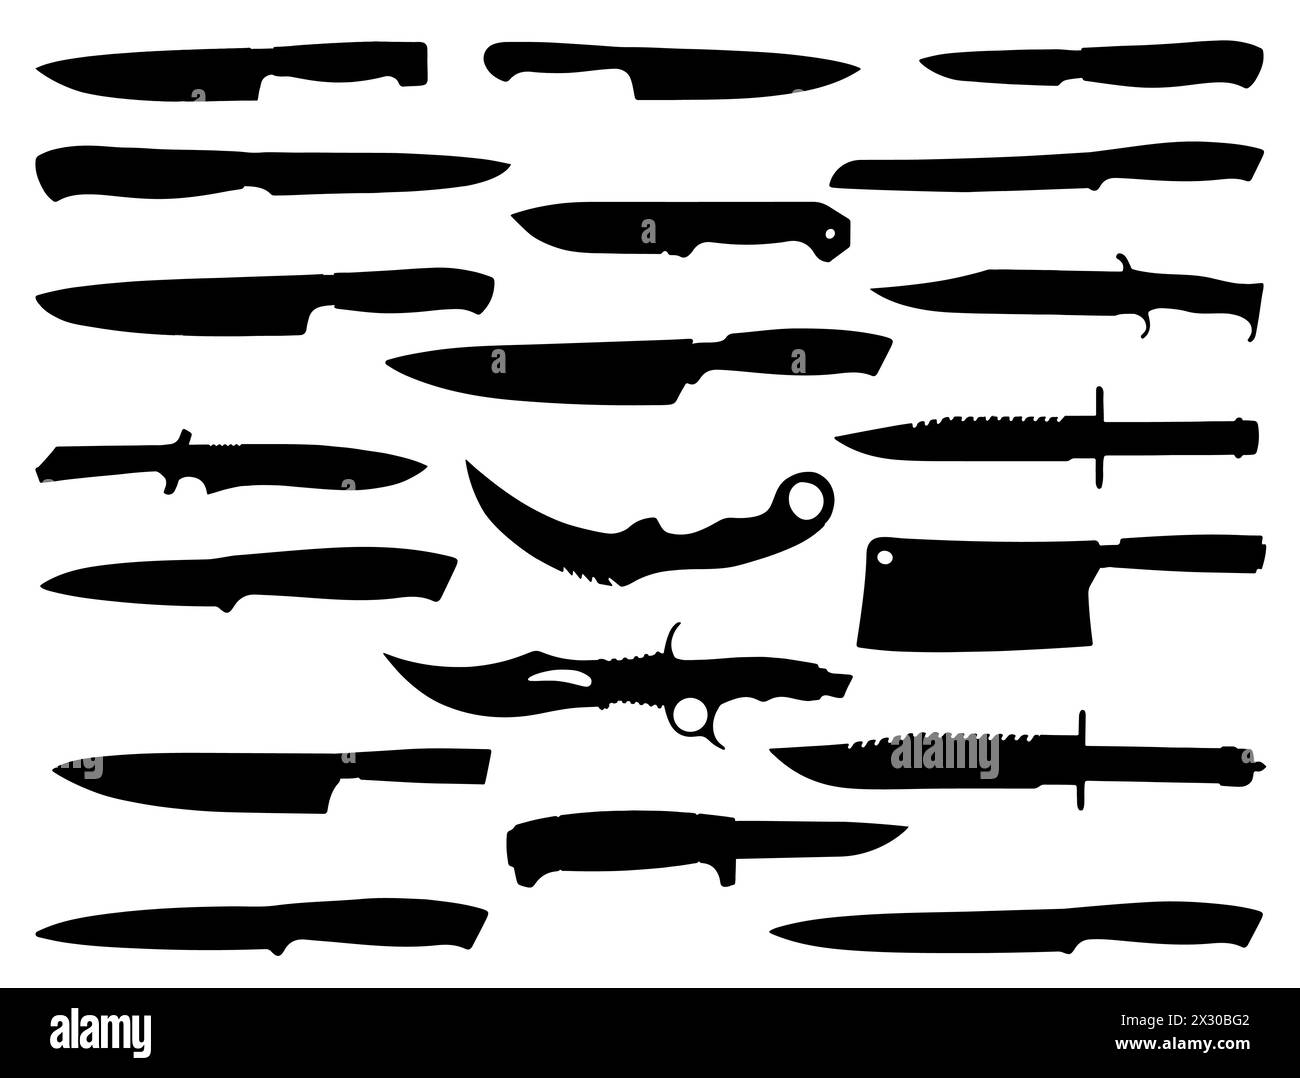 Knives silhouette vector art Stock Vector